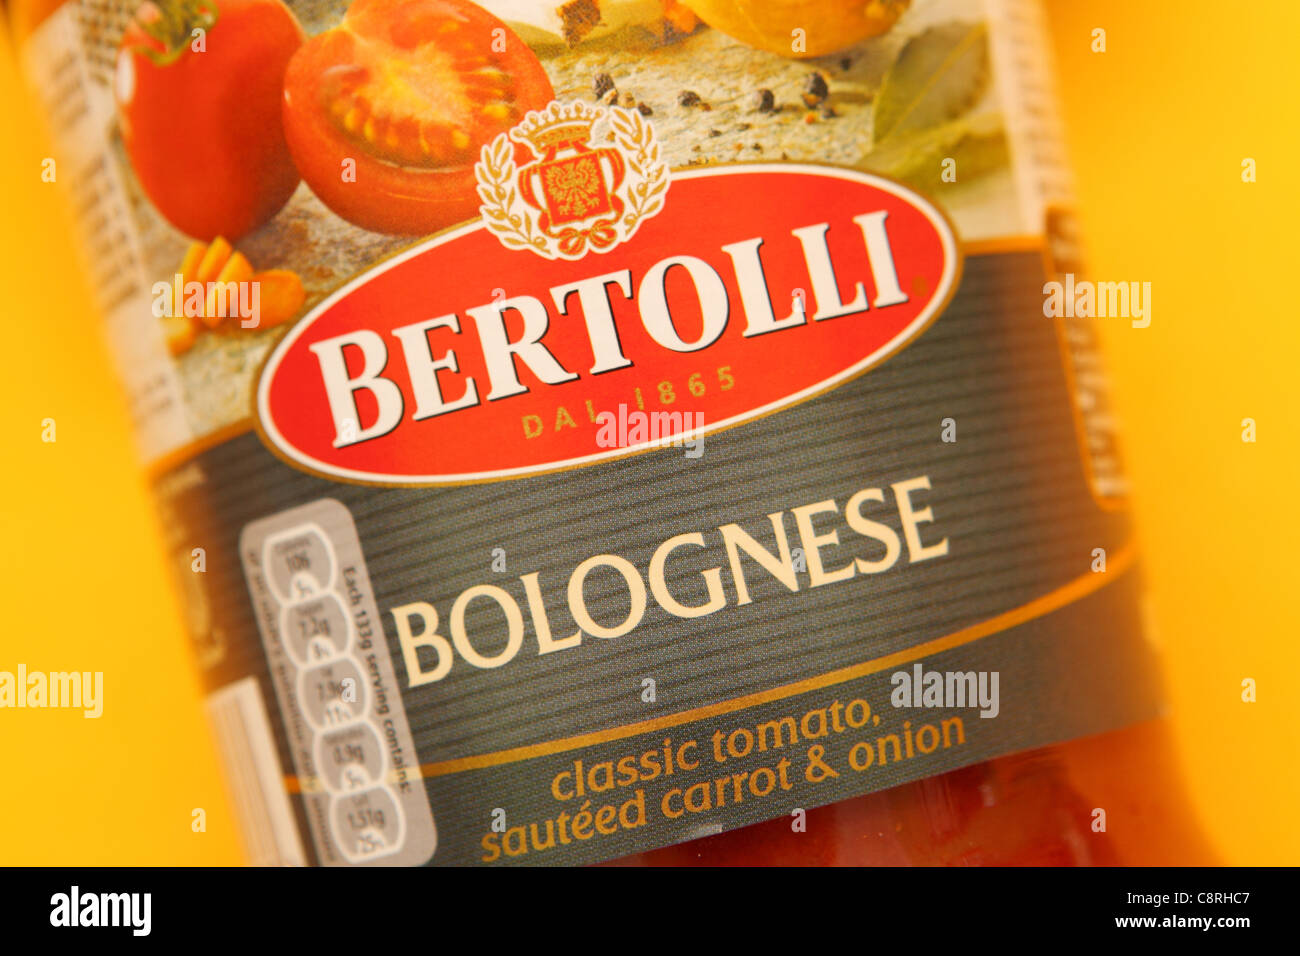 Bertolli Bolognese sauce jar brand Stock Photo